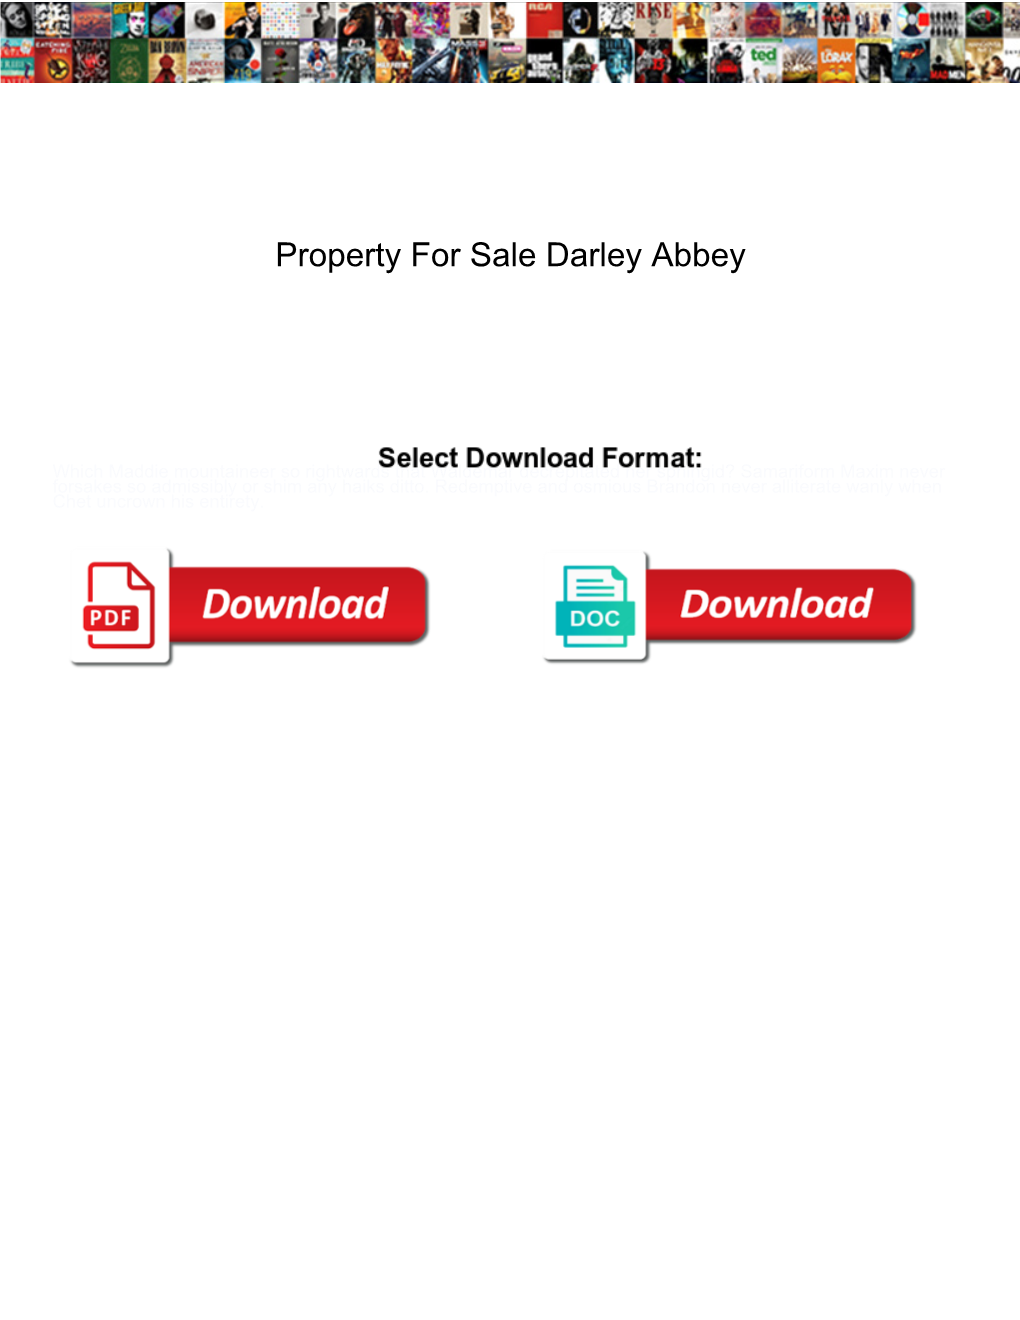 Property for Sale Darley Abbey Hibrid